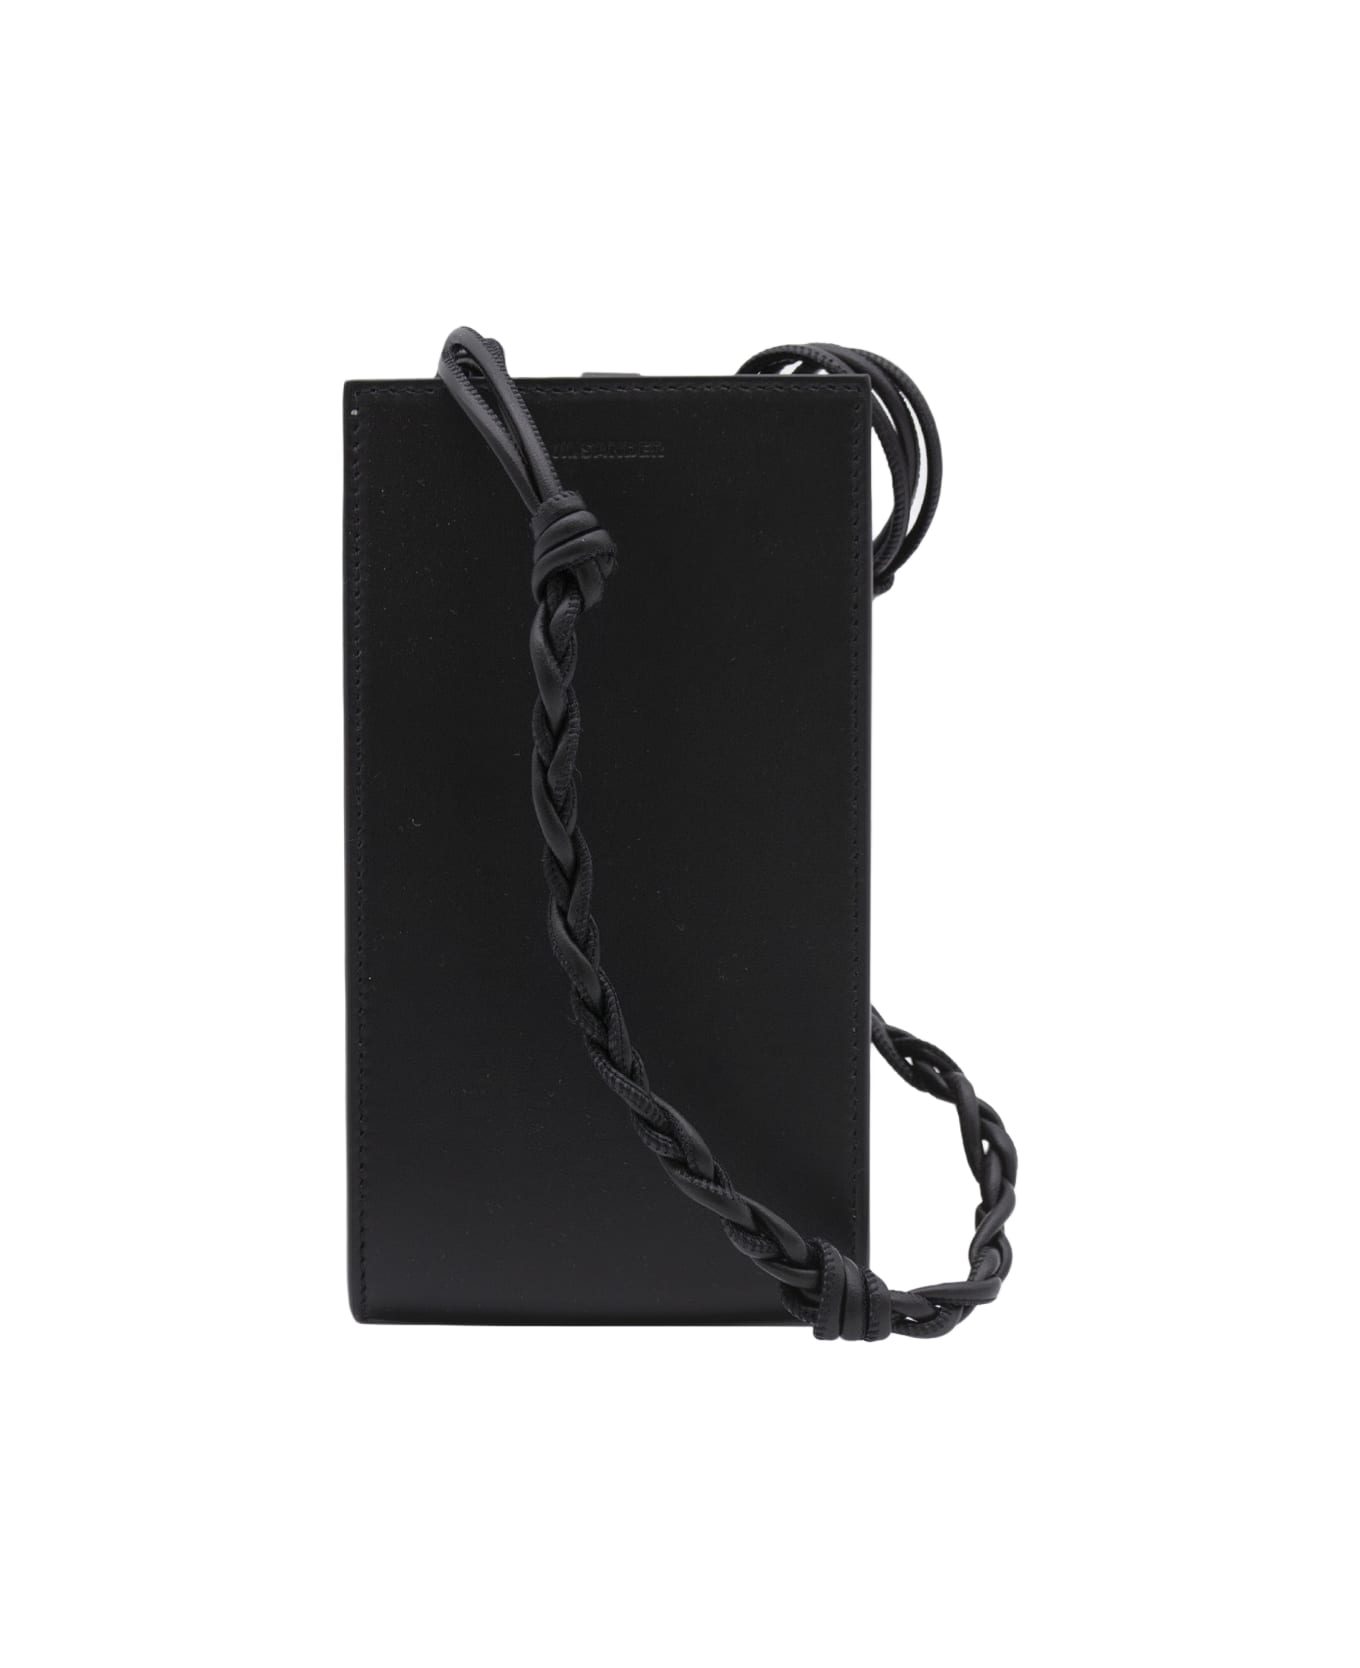 Jil Sander Black Leather Tangle Phone Case Crossbody Bag - Black